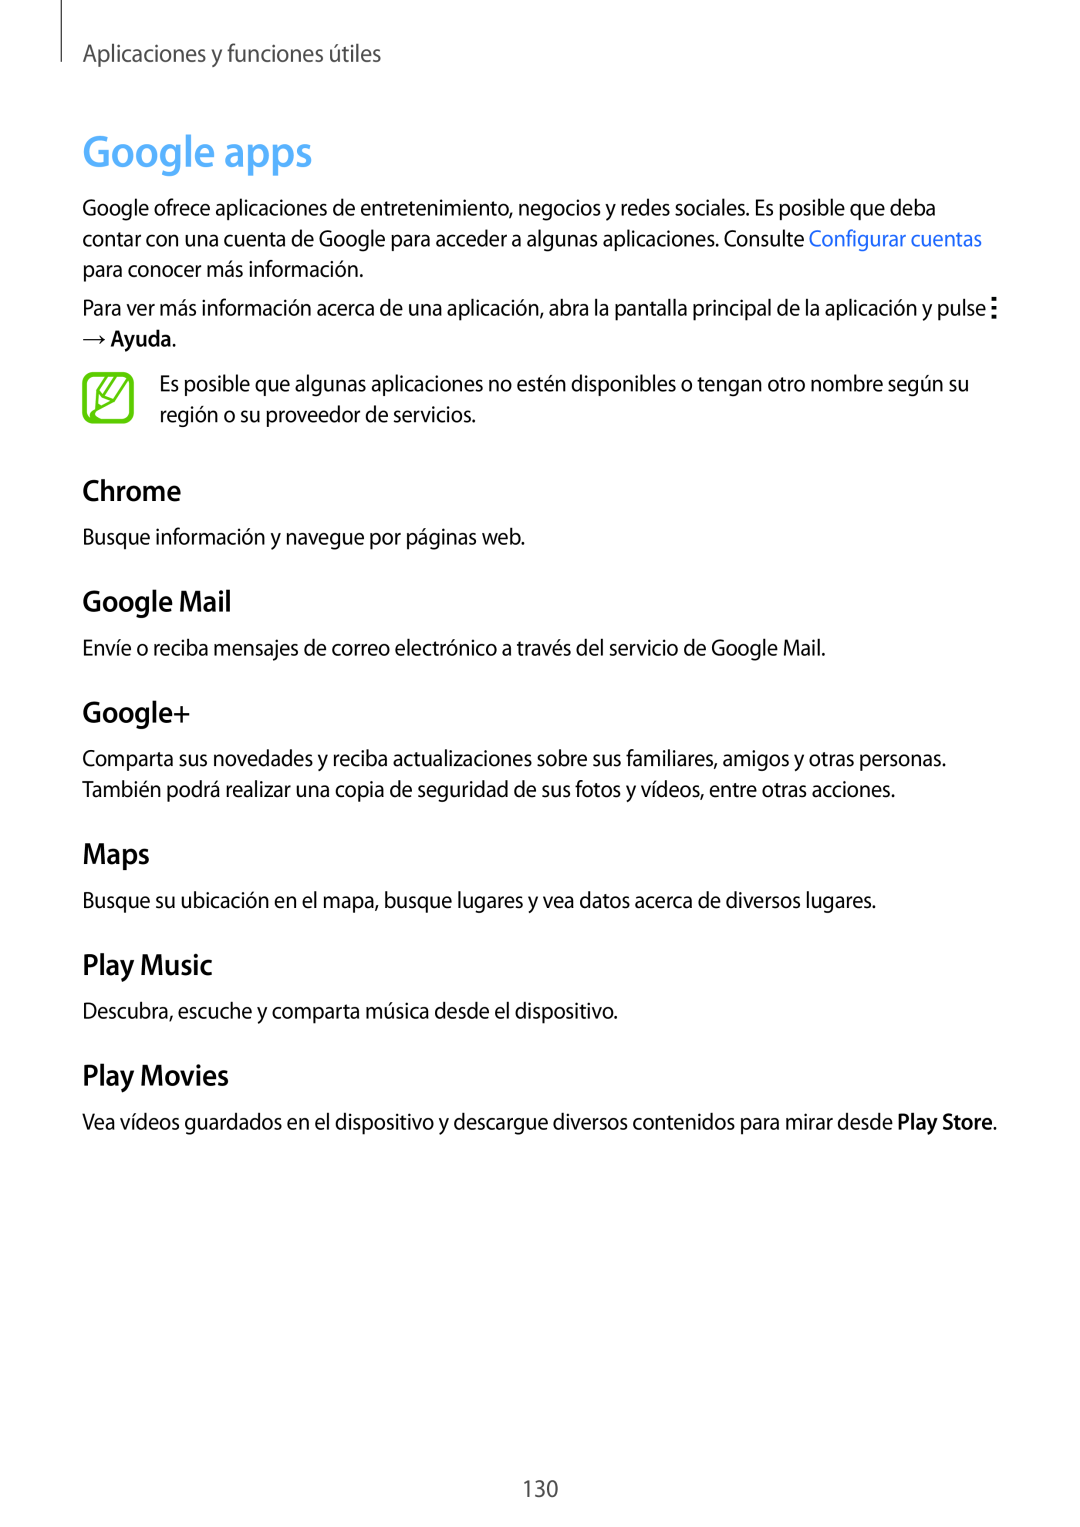 Samsung SM-T700NZWATPH, SM-T700NZWAXEO Google apps, → Ayuda, Chrome, Google Mail, Google+, Maps, Play Music, Play Movies 